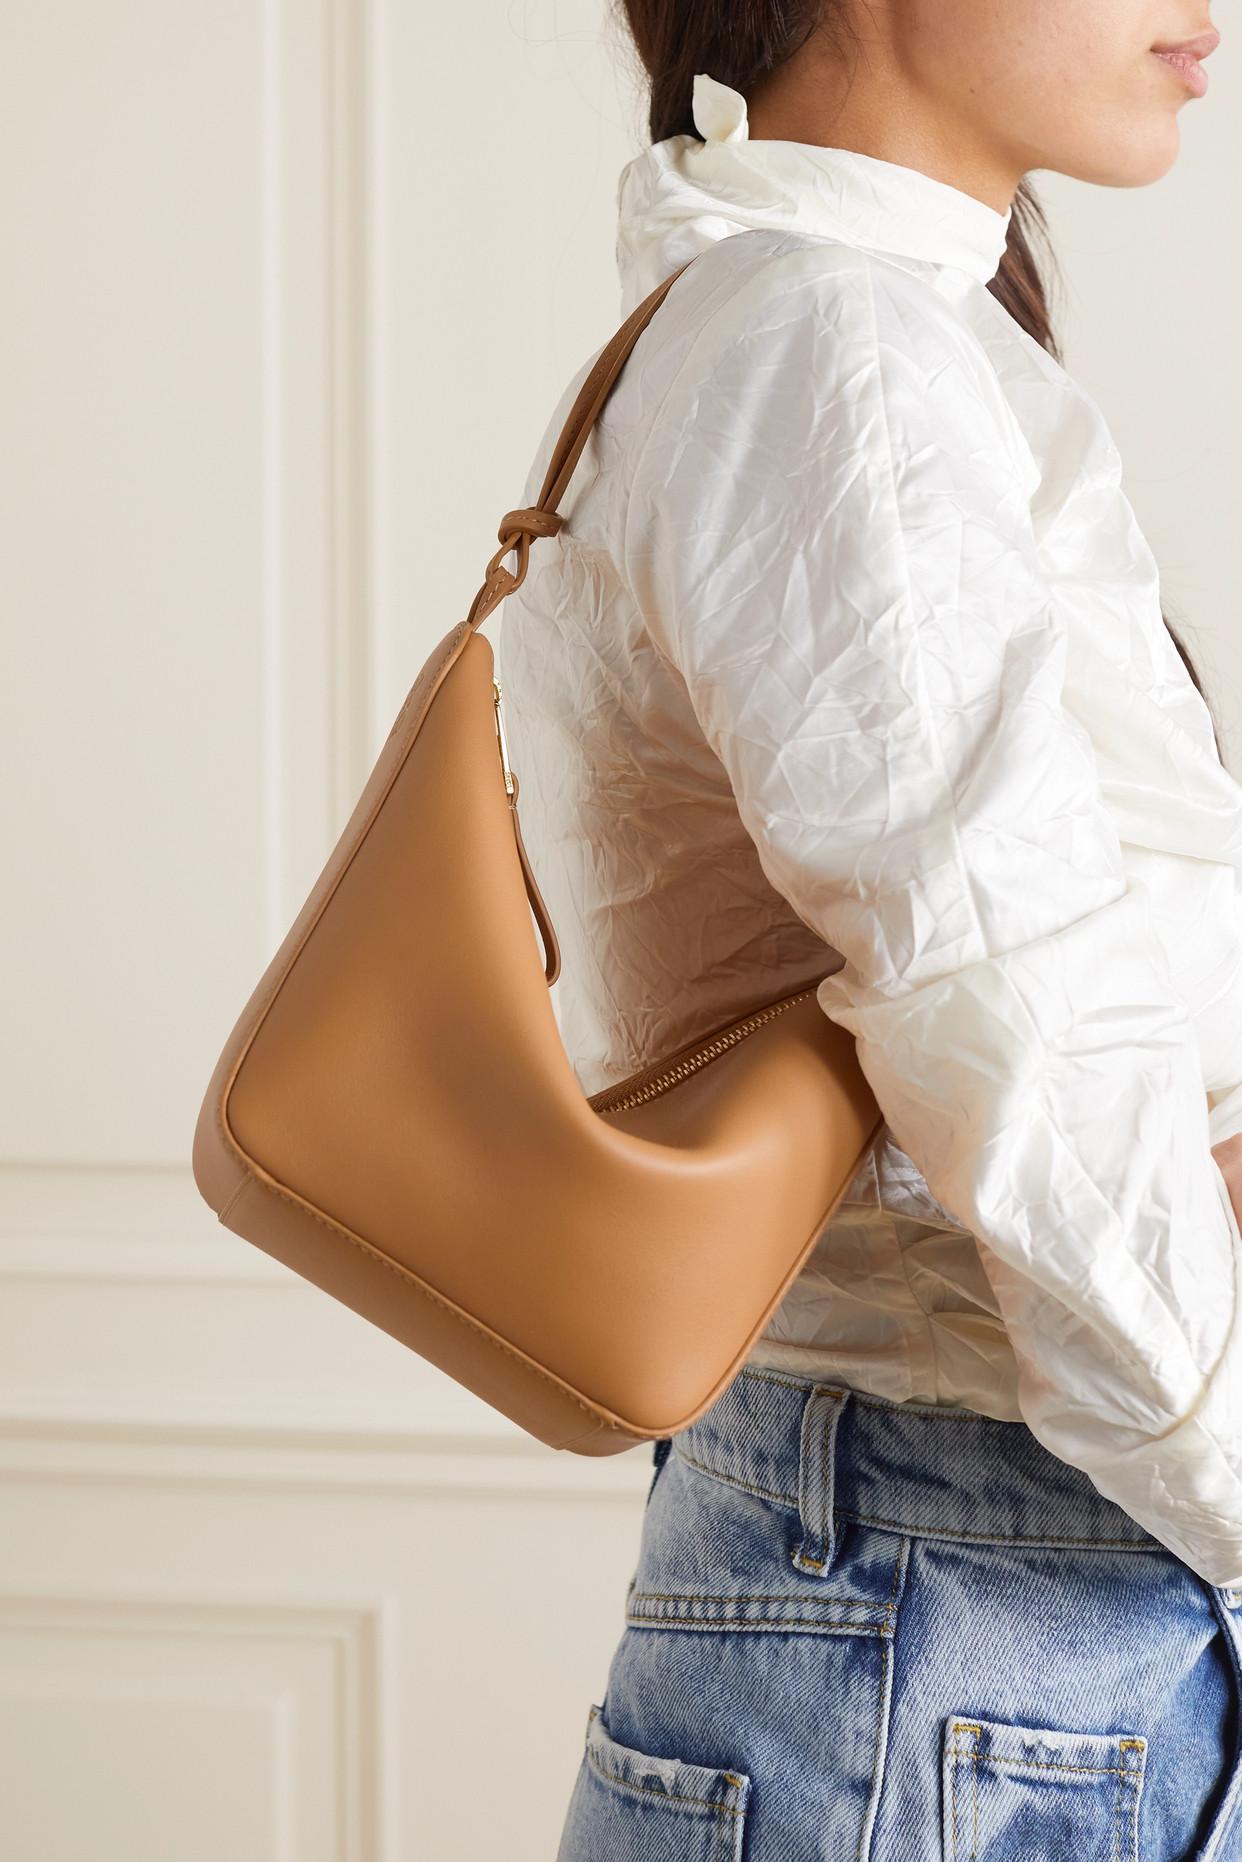 Loewe Hammock Mini leather shoulder bag